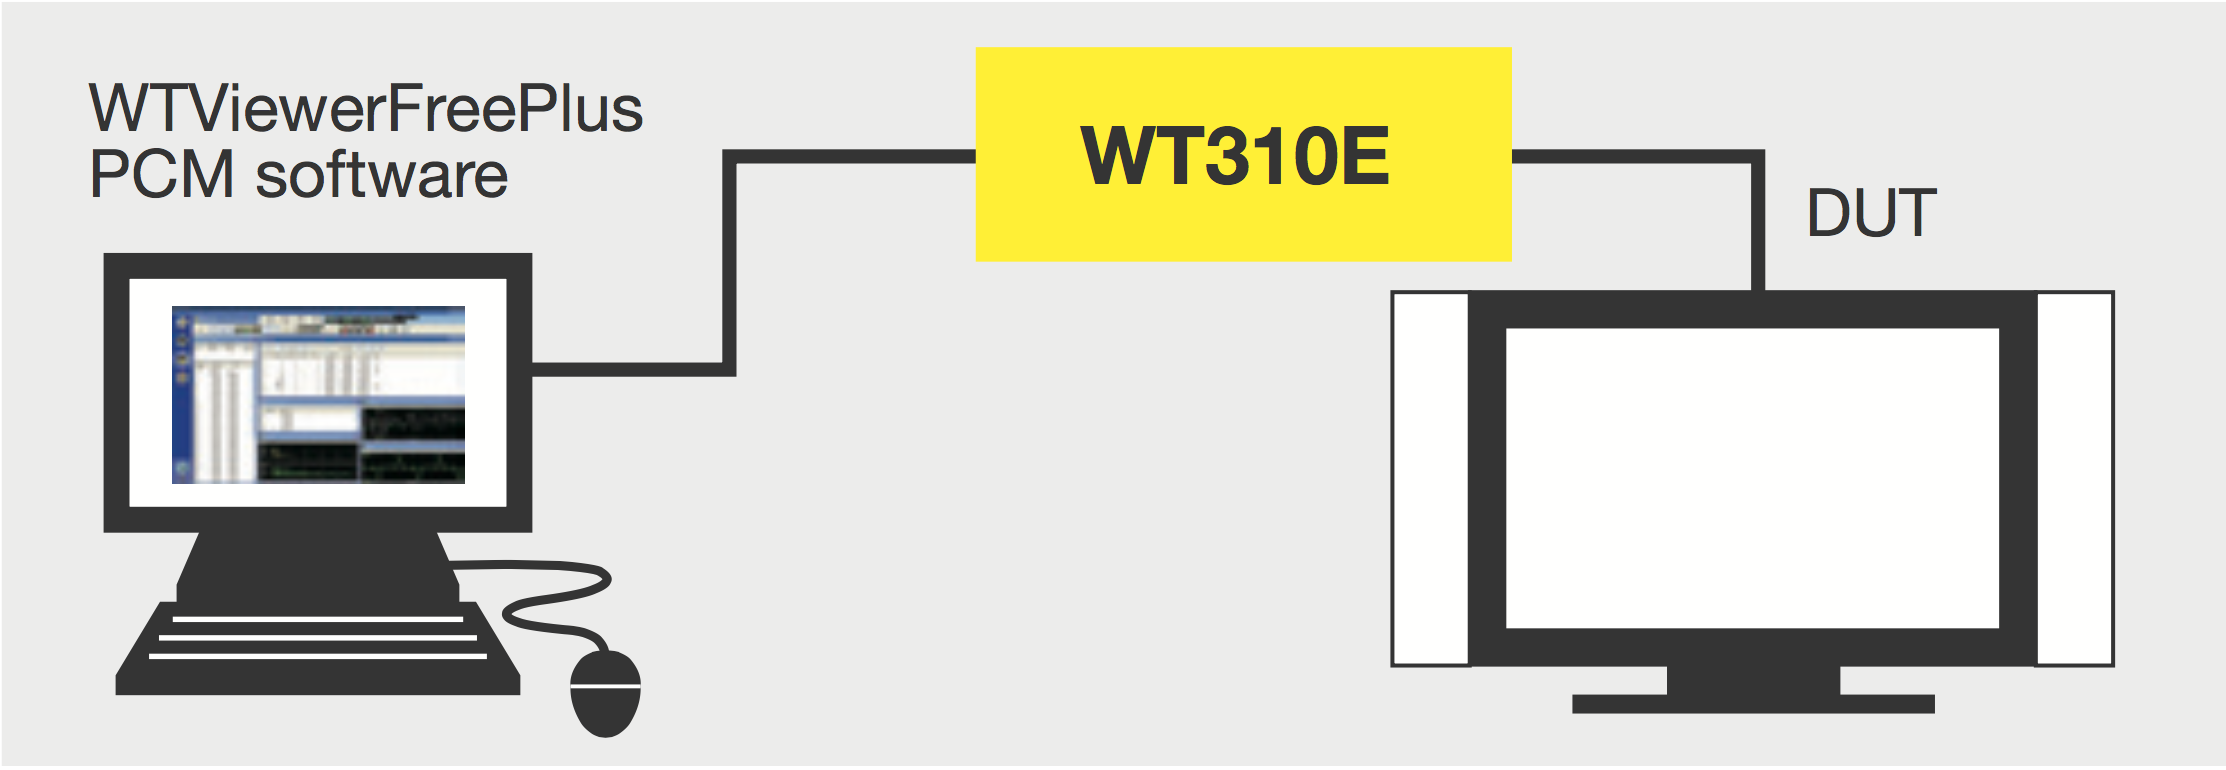 9 International Standard WT300E 1